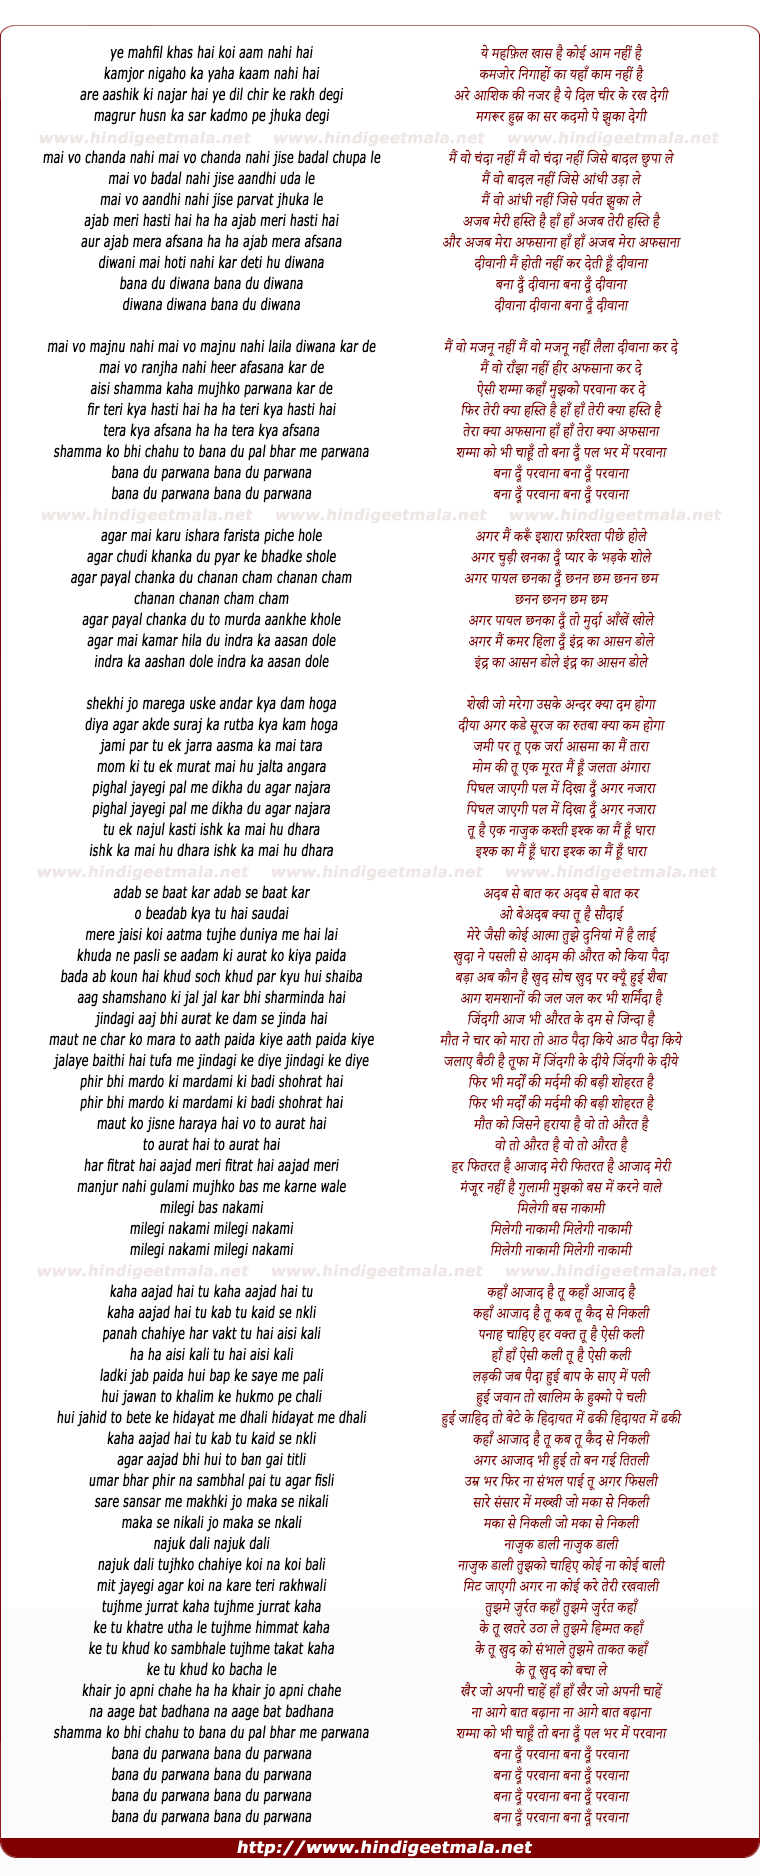 lyrics of song Mai Wo Chanda